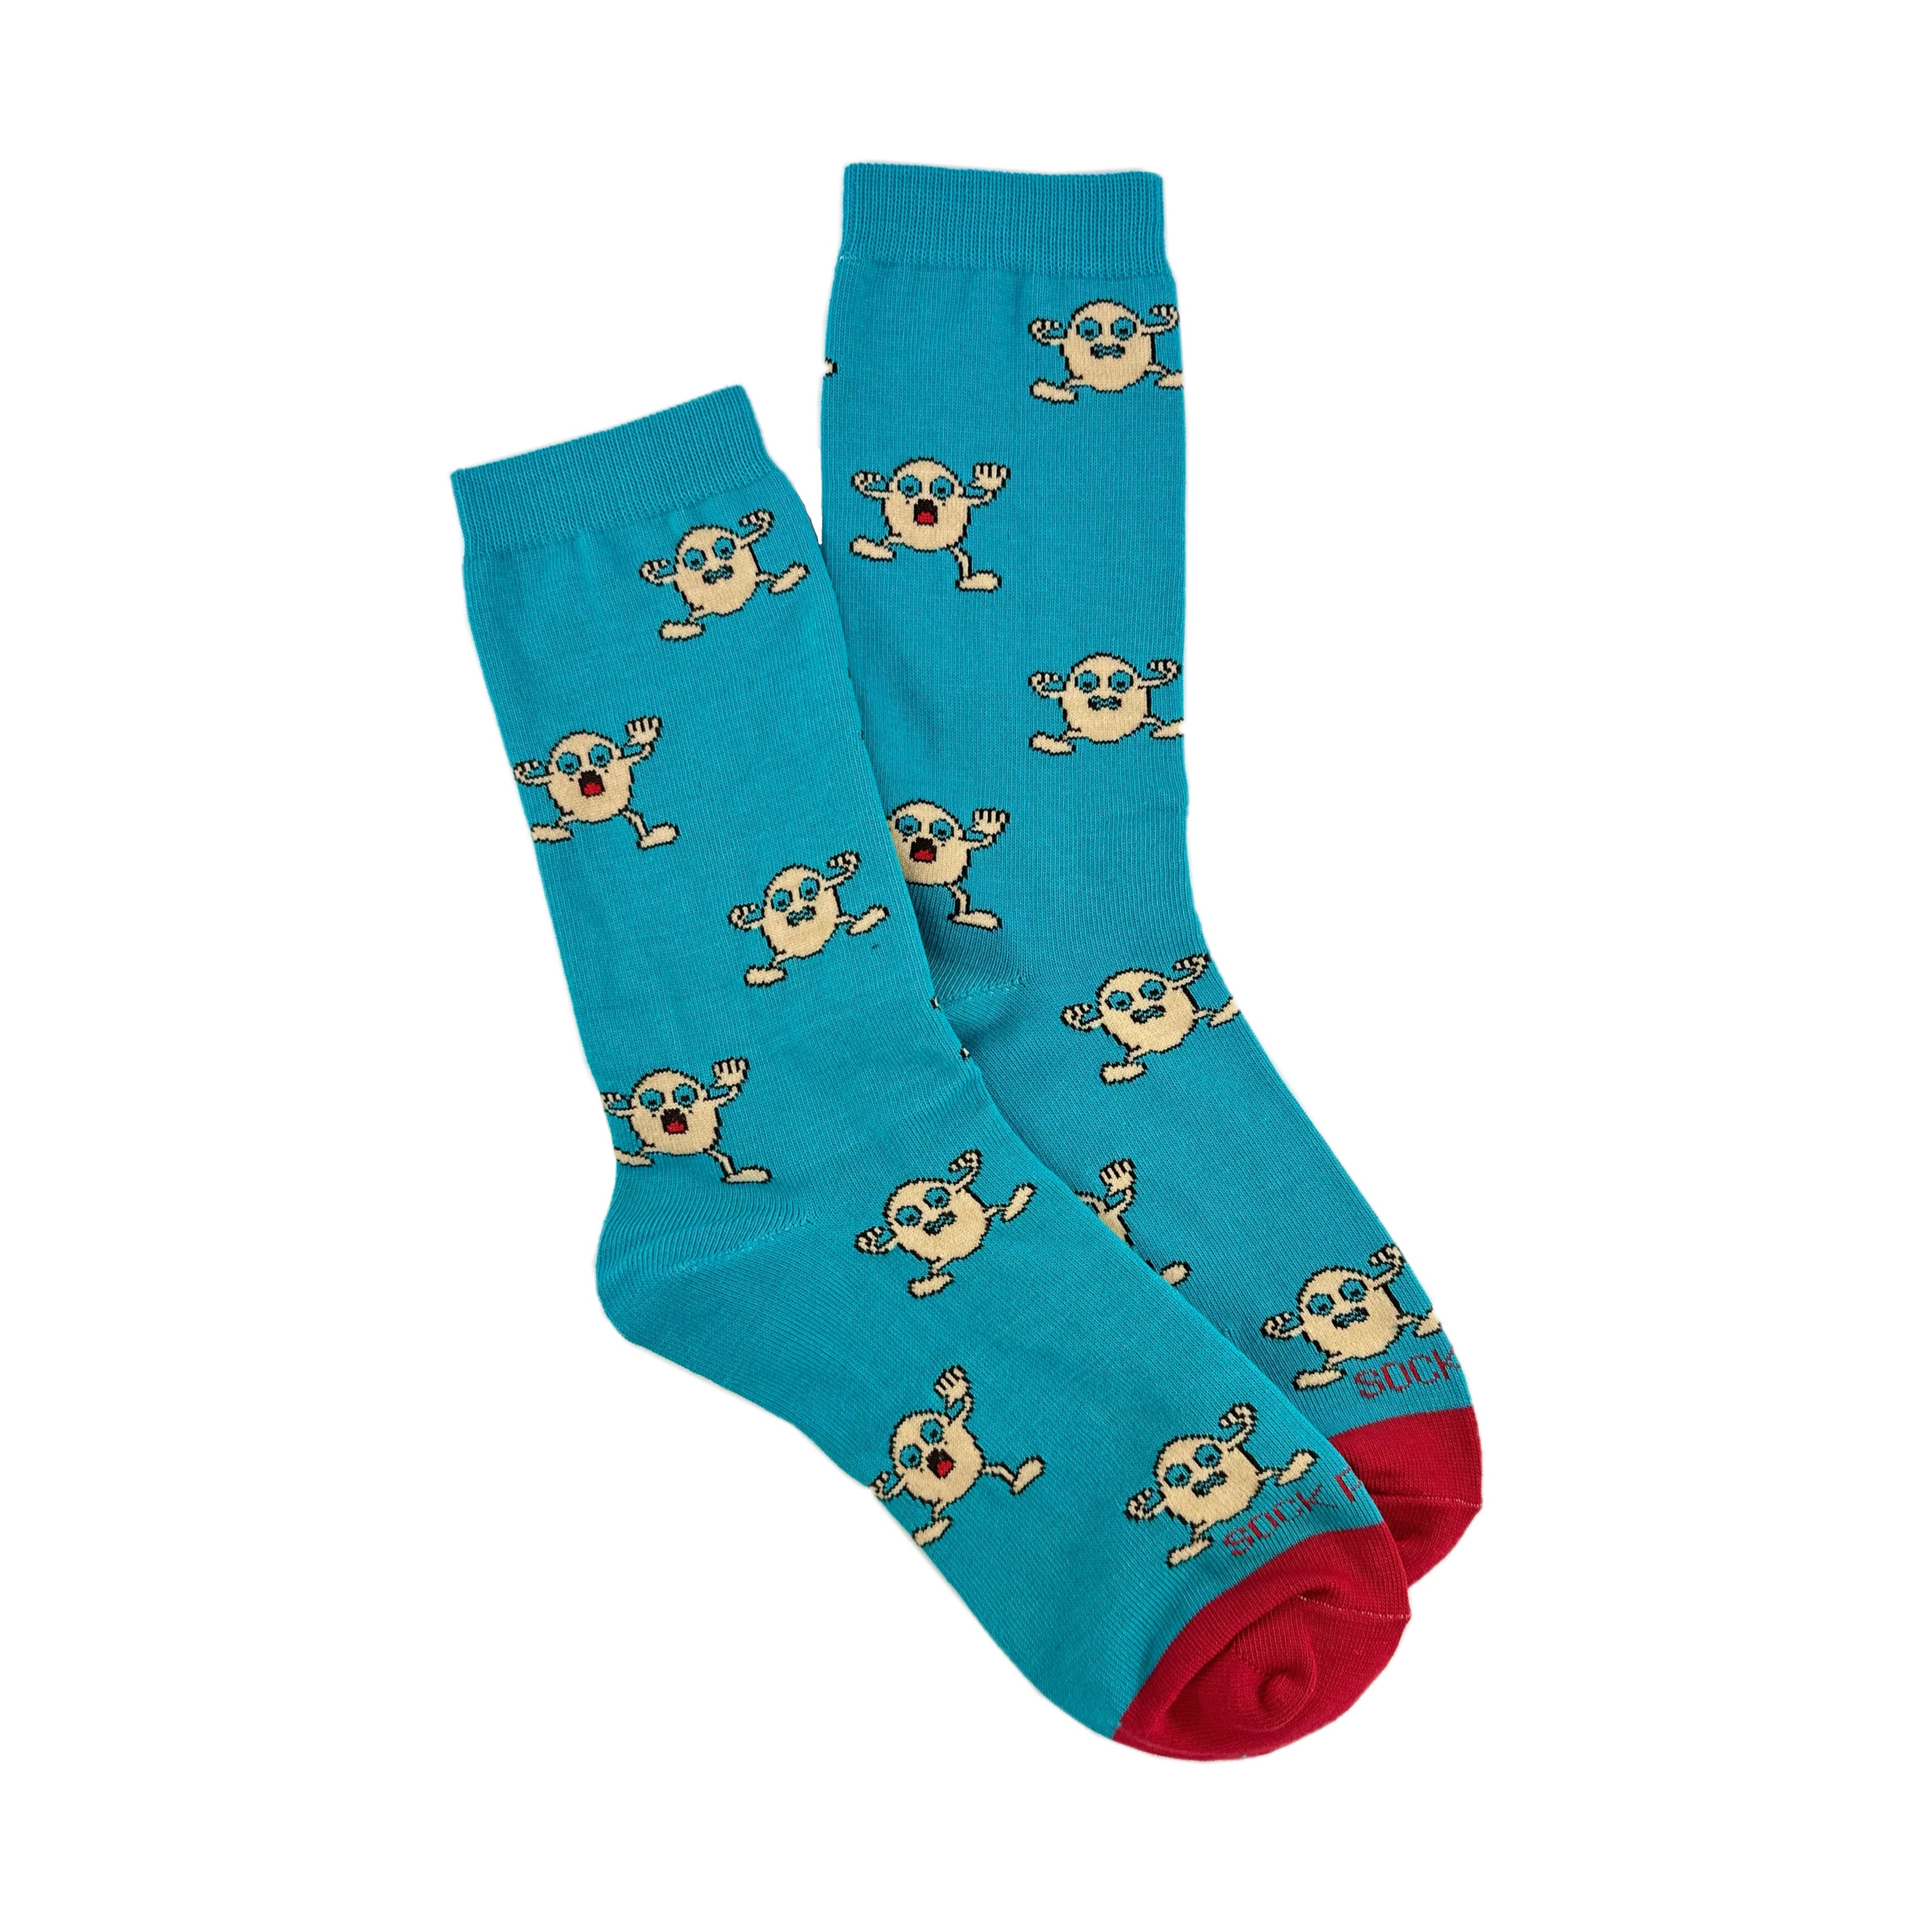 Wild and Crazy Egg Socks from the Sock Panda (Adult Medium)